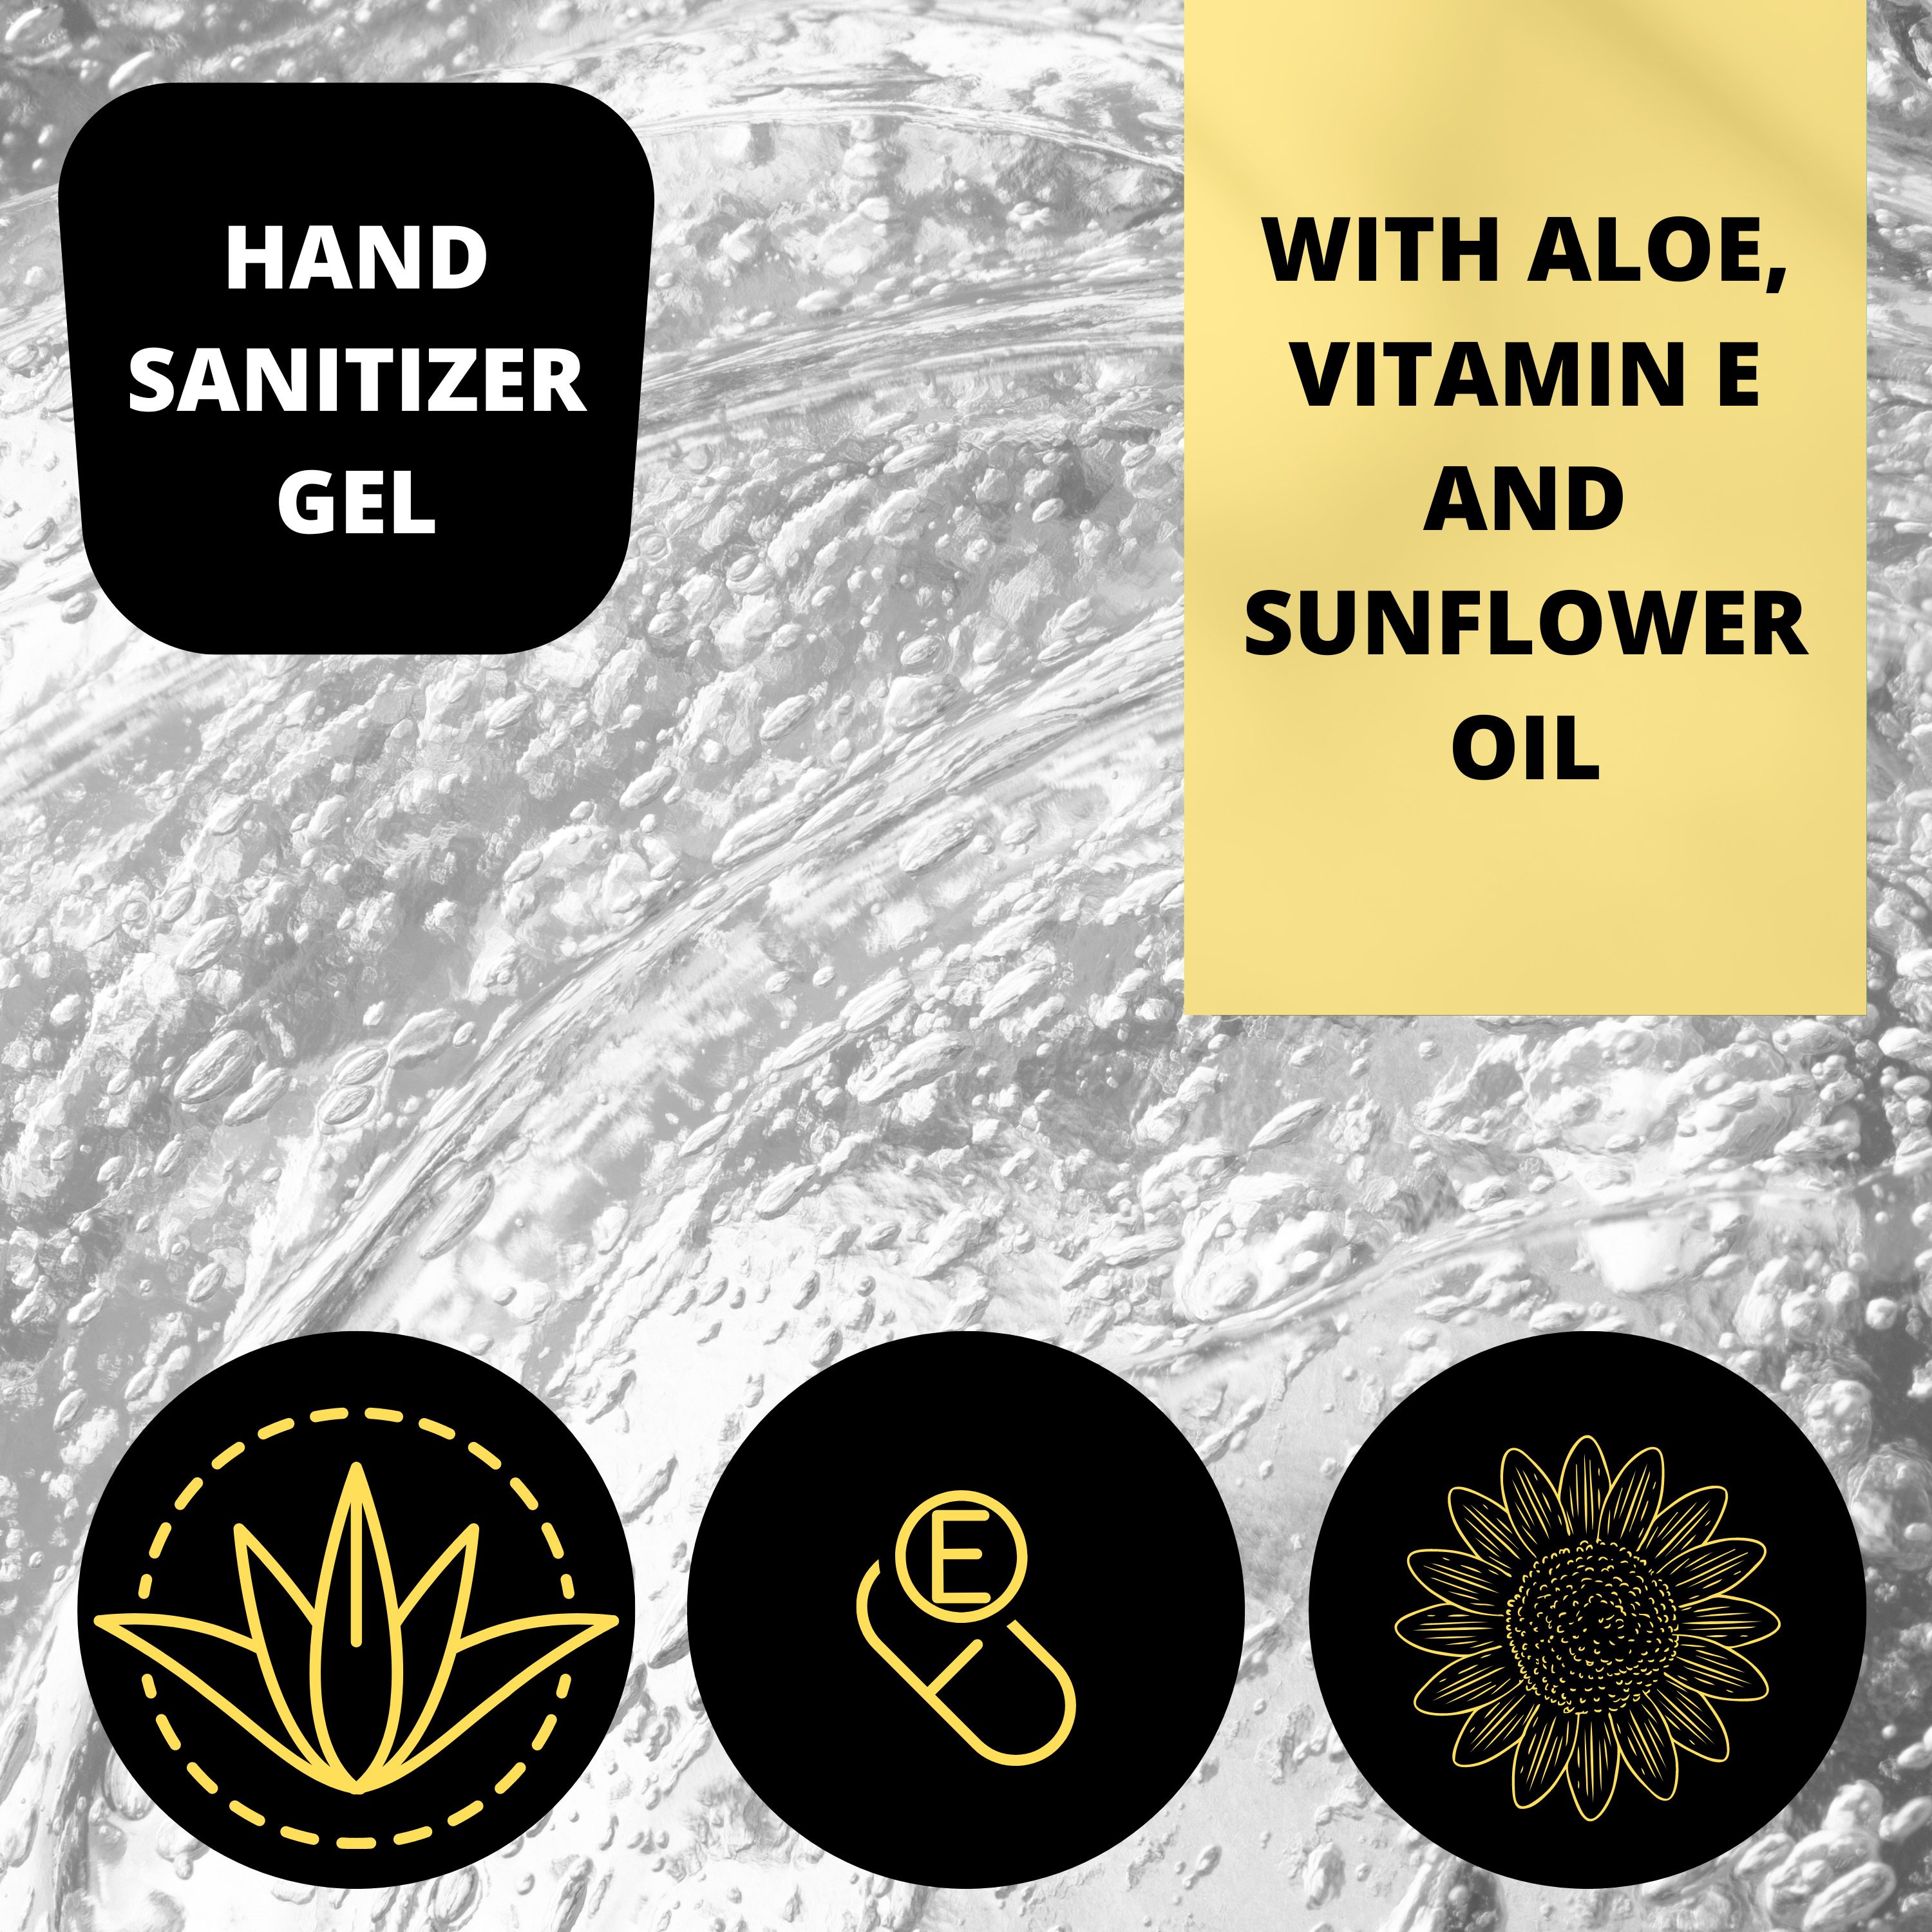 Black Canyon Grapefruit Delight Scented Hand Sanitizer Gel